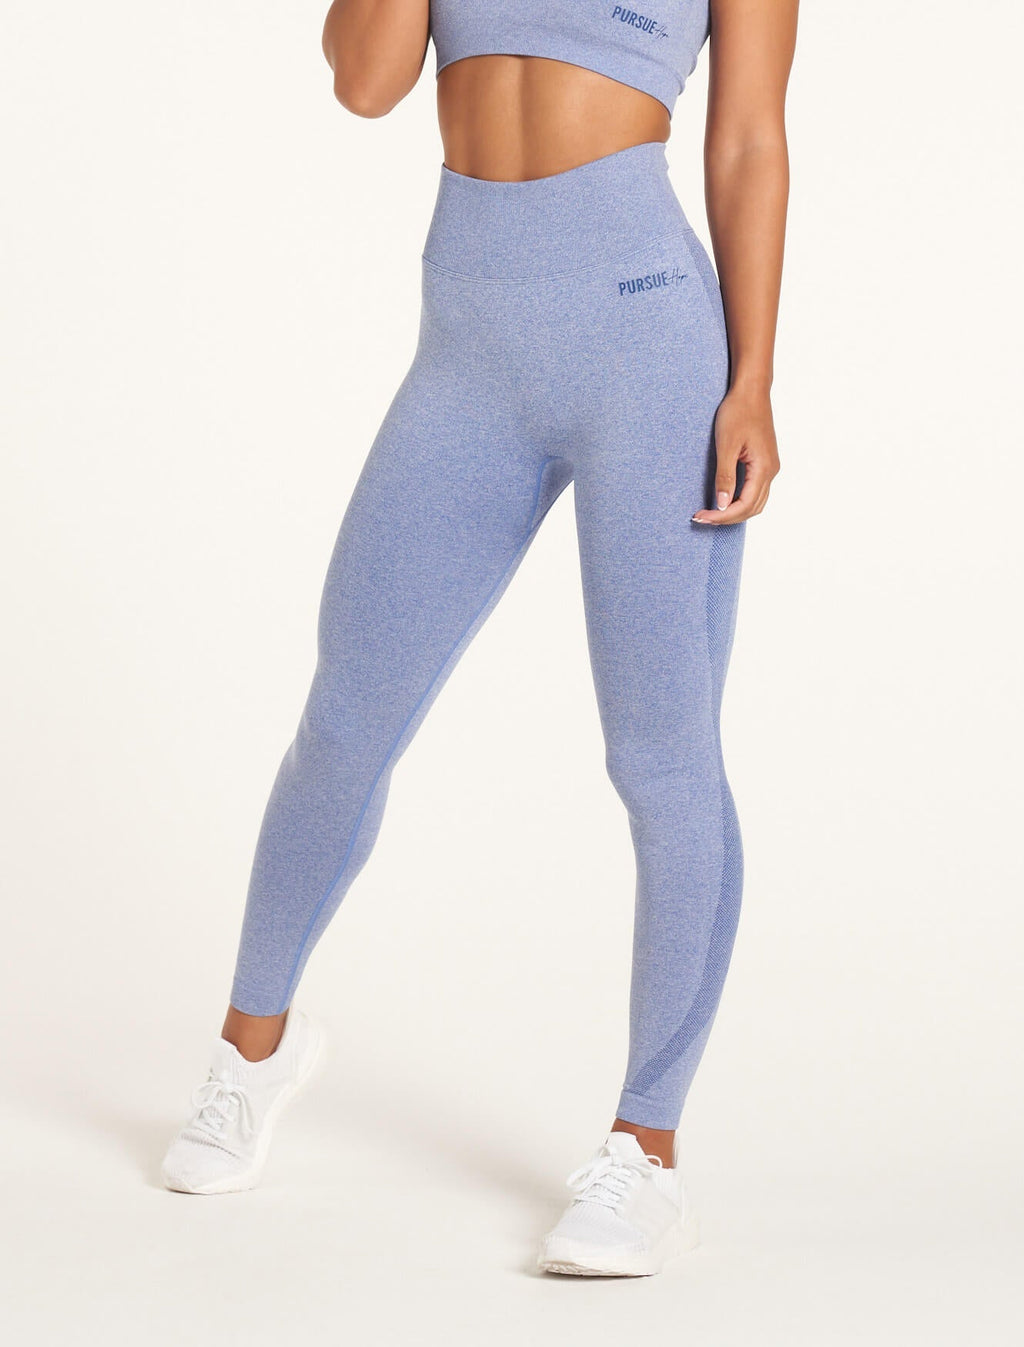 products/womens-pursue-hope-seamless-leggings-blue-marl.jpg